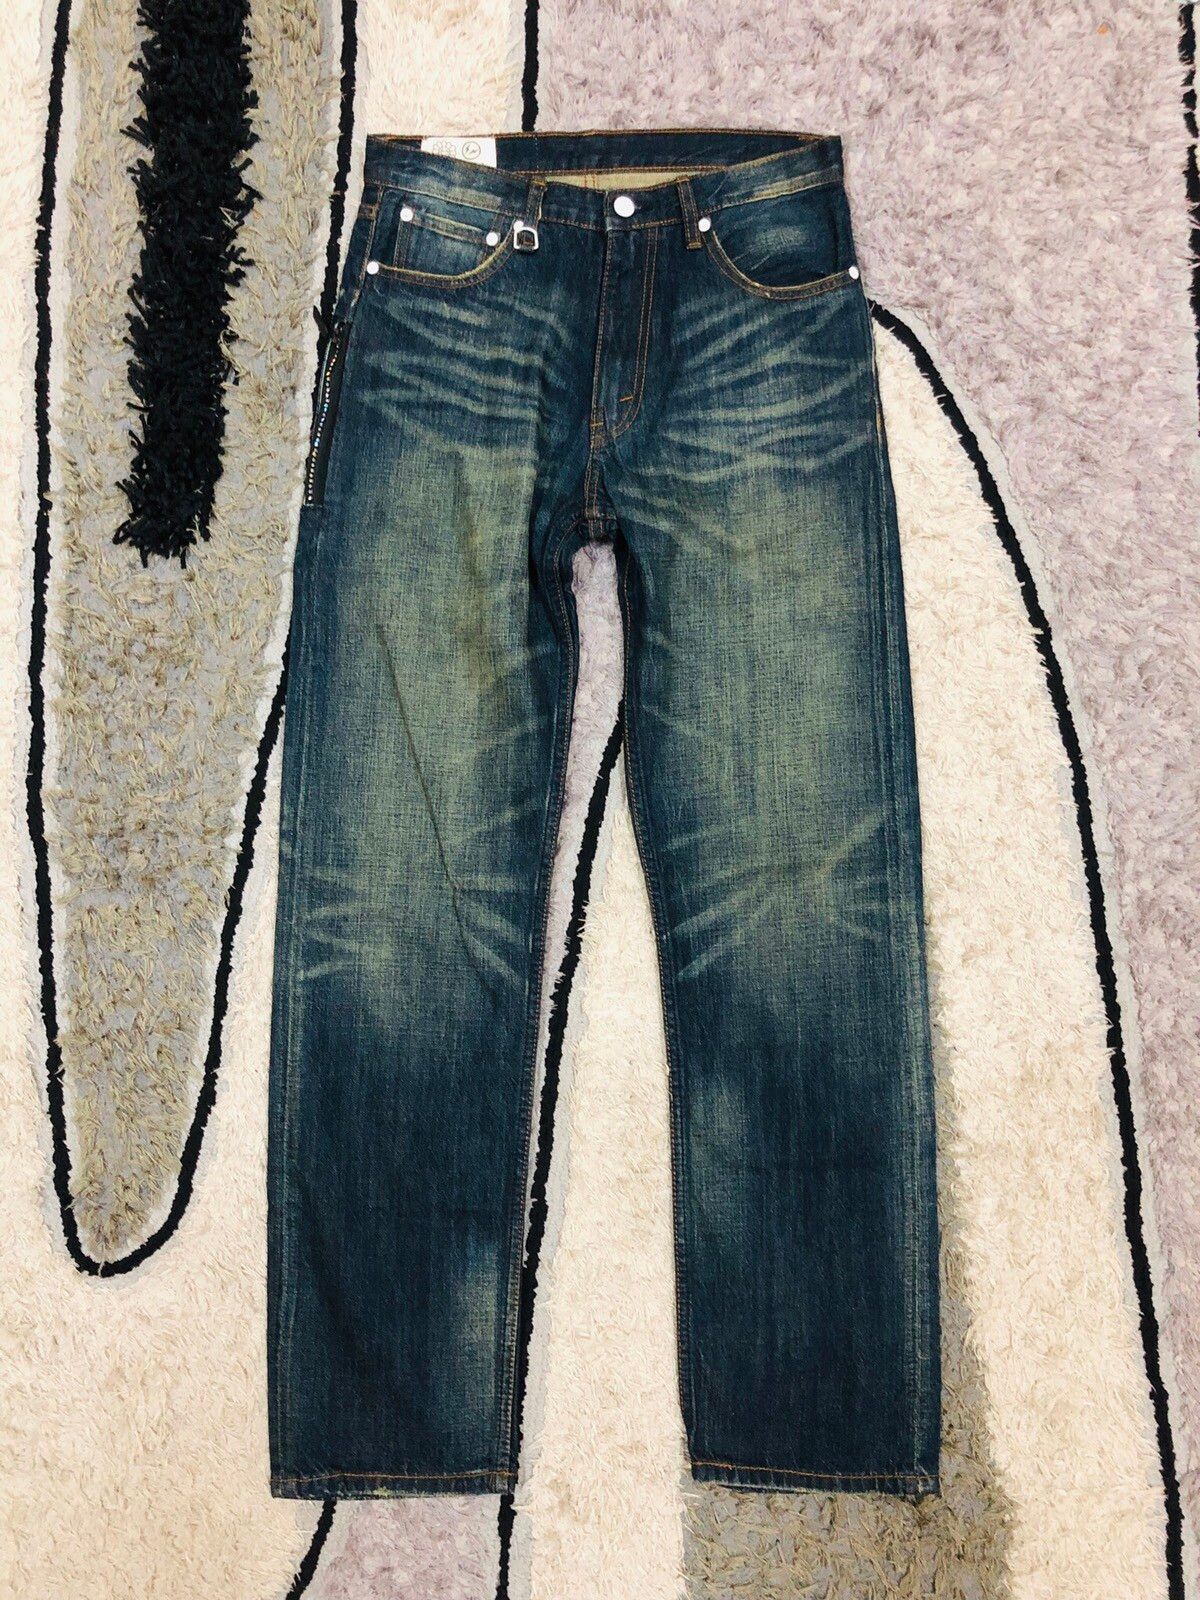 takashi murakami on jeans｜TikTok Search